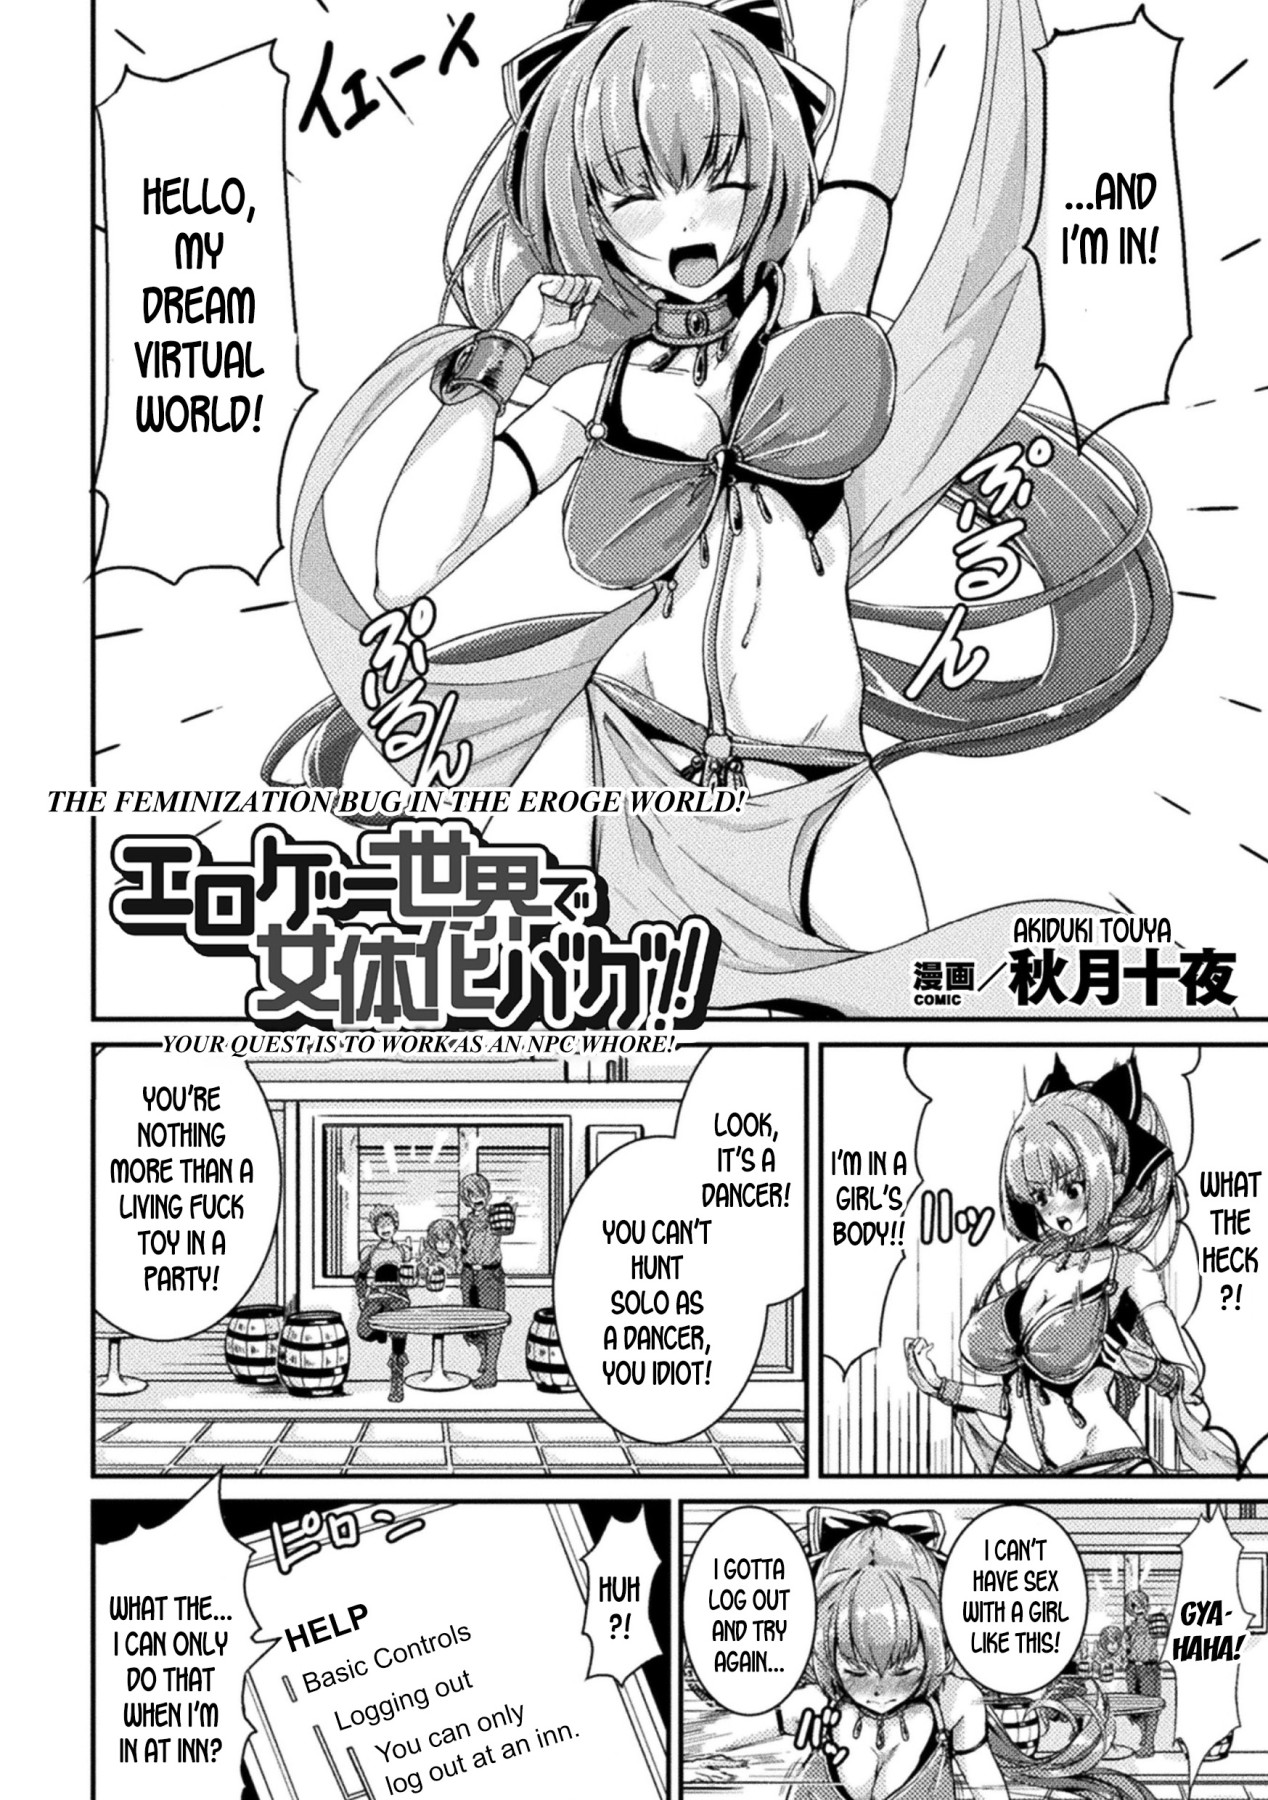 Hentai Manga Comic-The Feminization Bug in the Eroge World!-Read-2